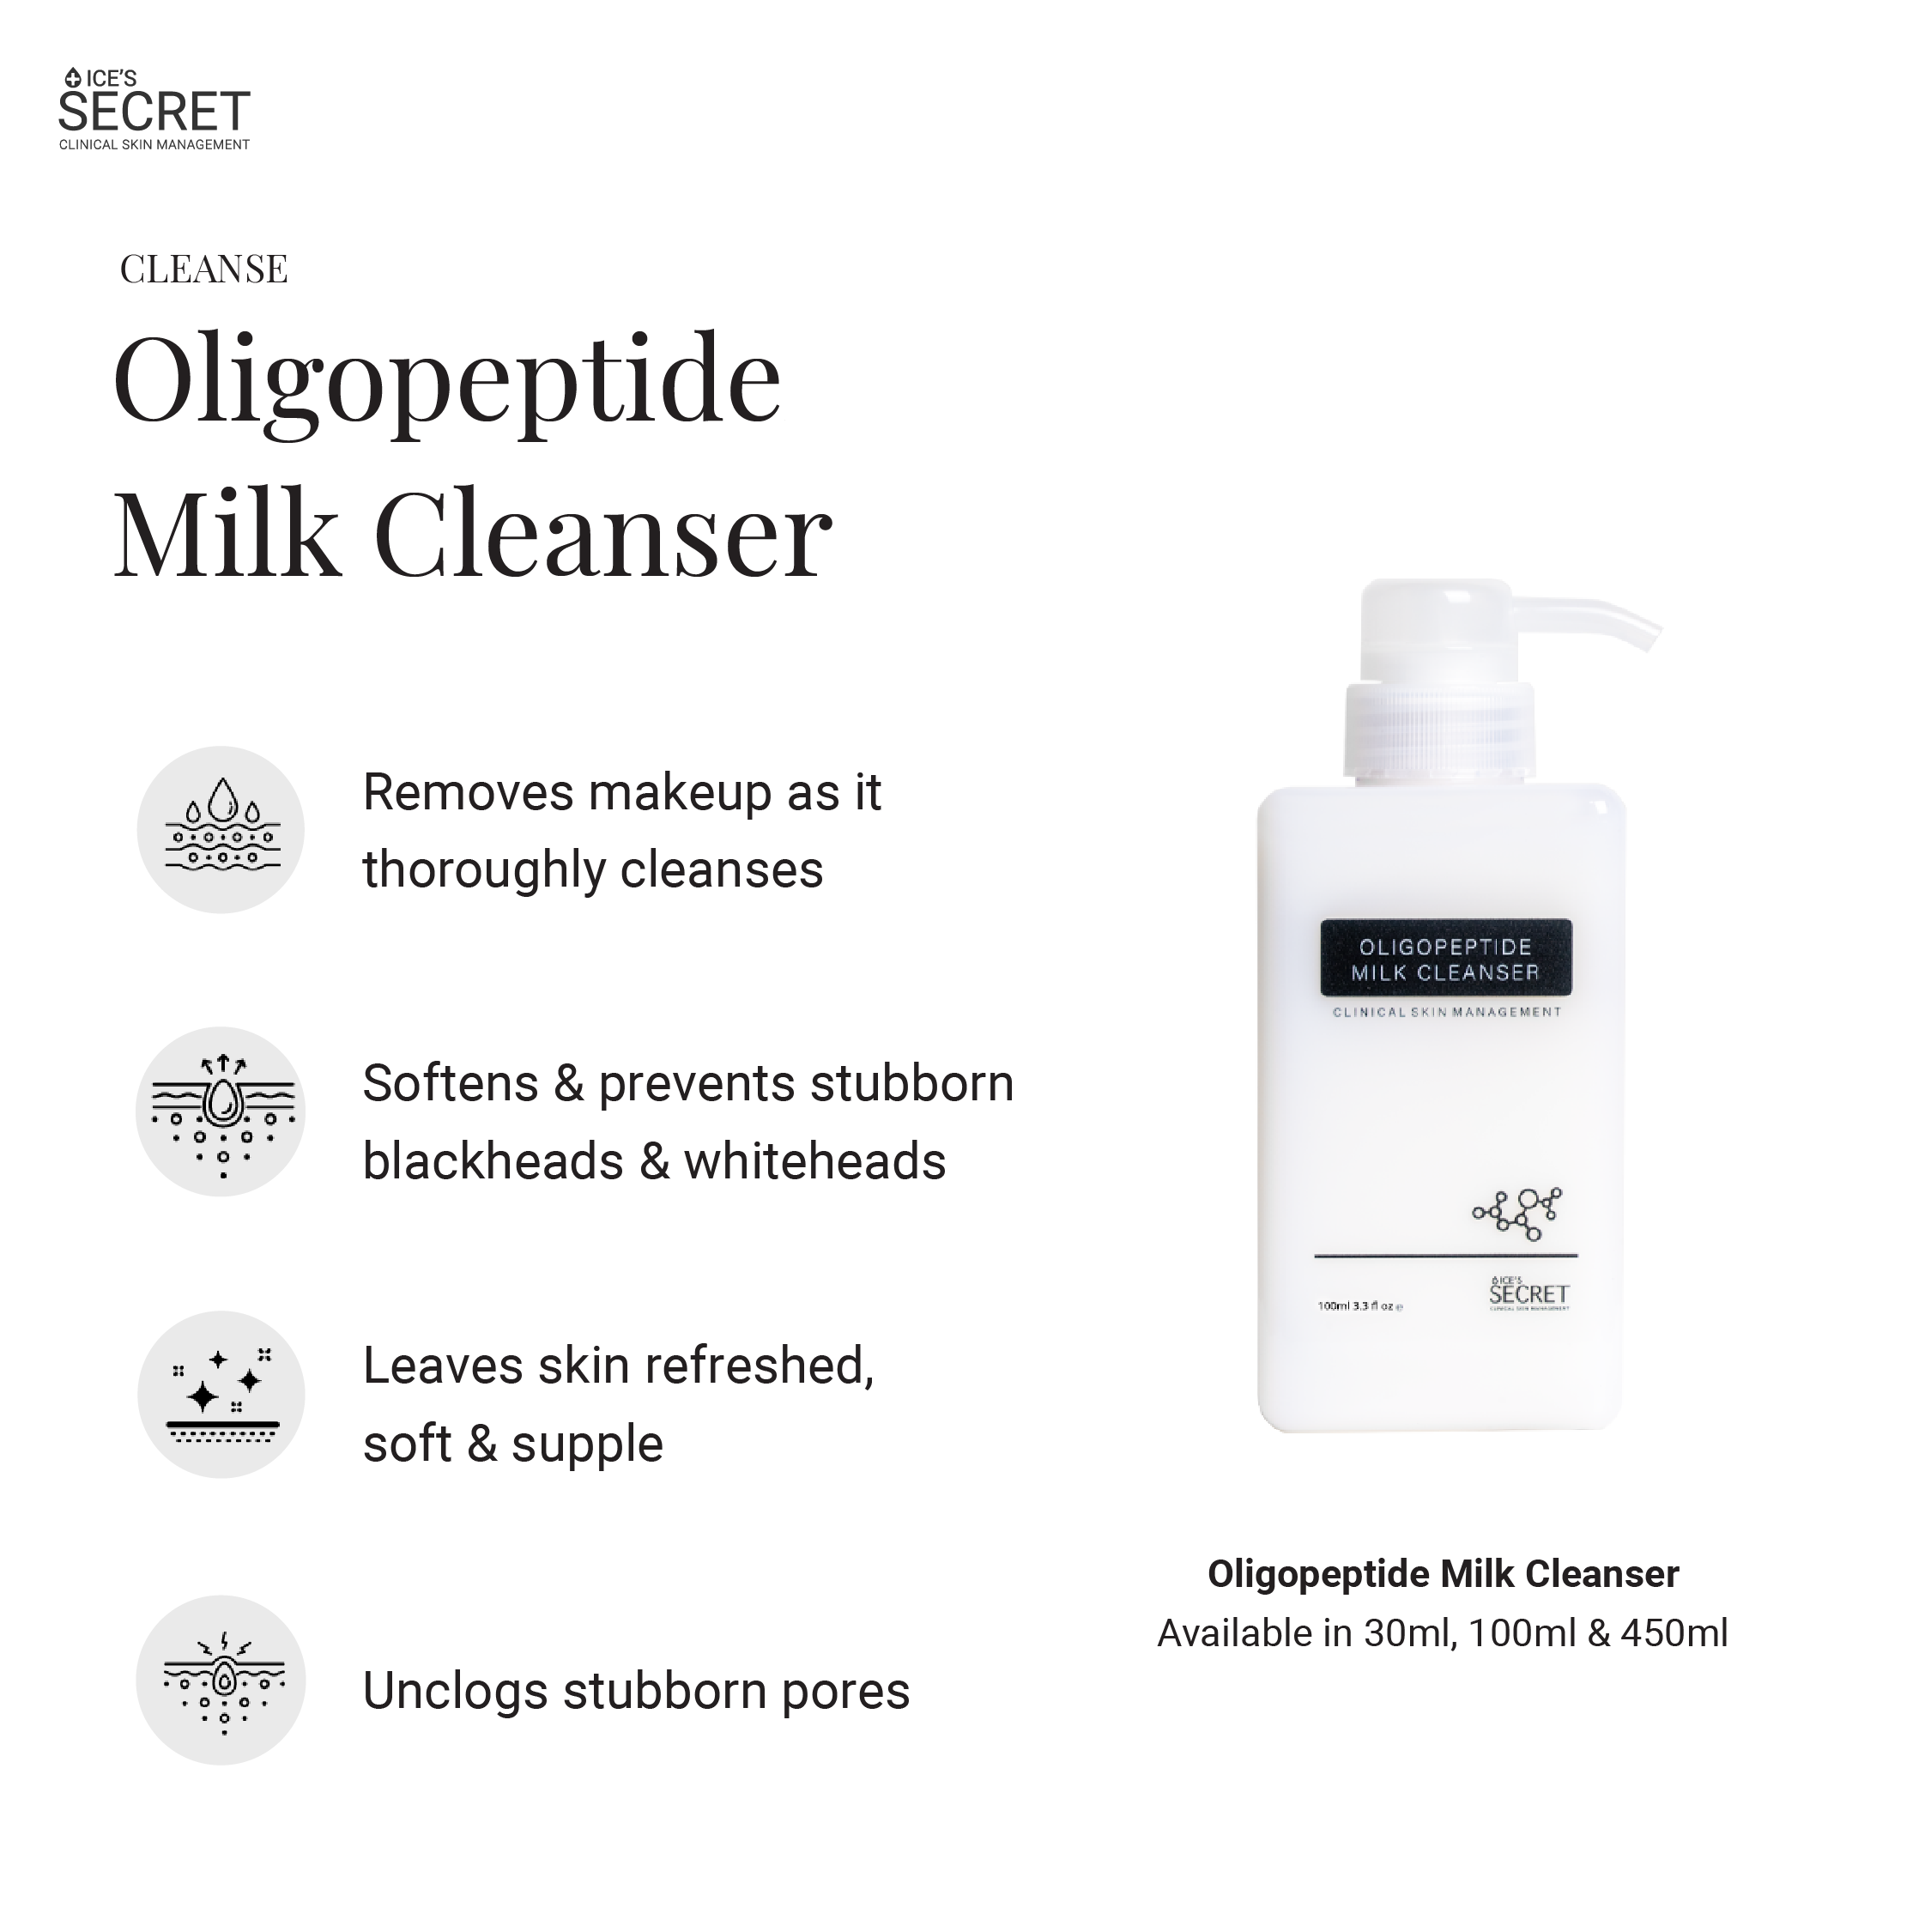 Oligopeptide Milk Cleanser